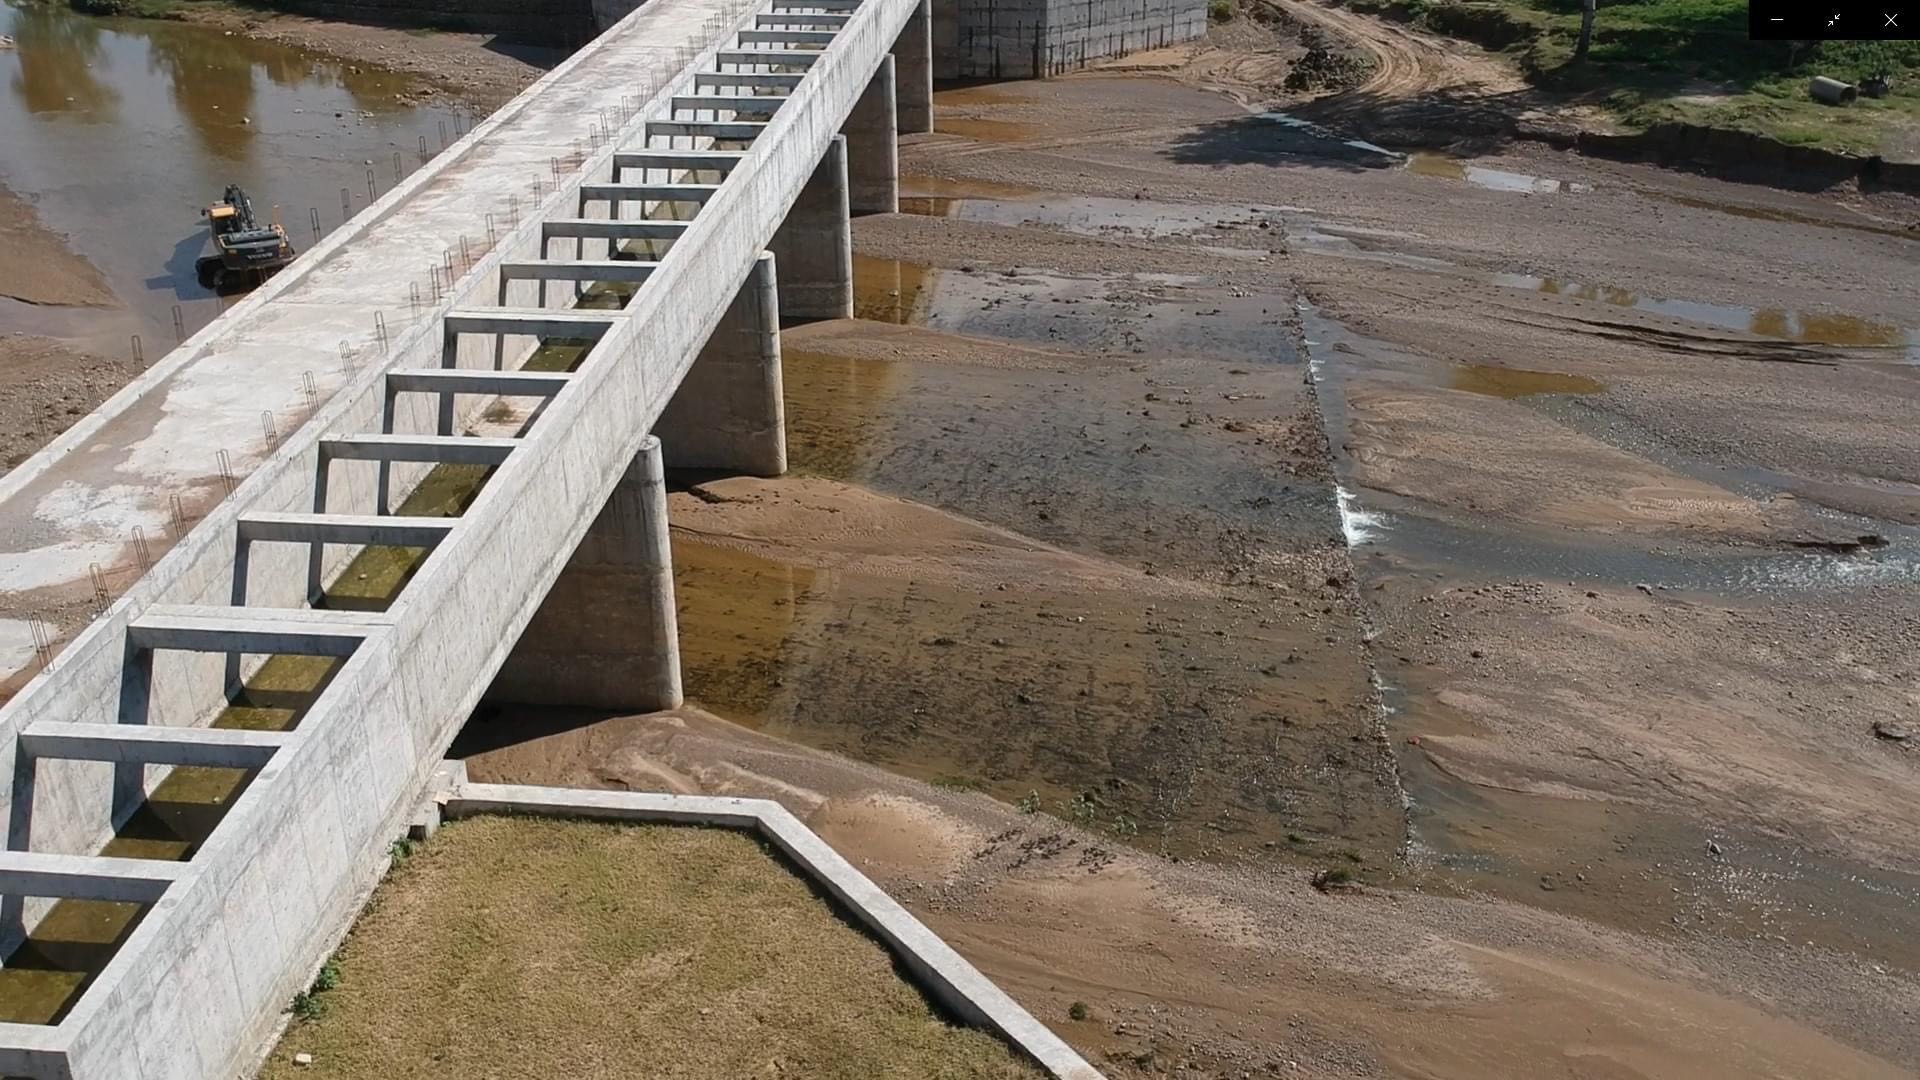 Baitadi Town Water Supply and Sanitation Sector Project